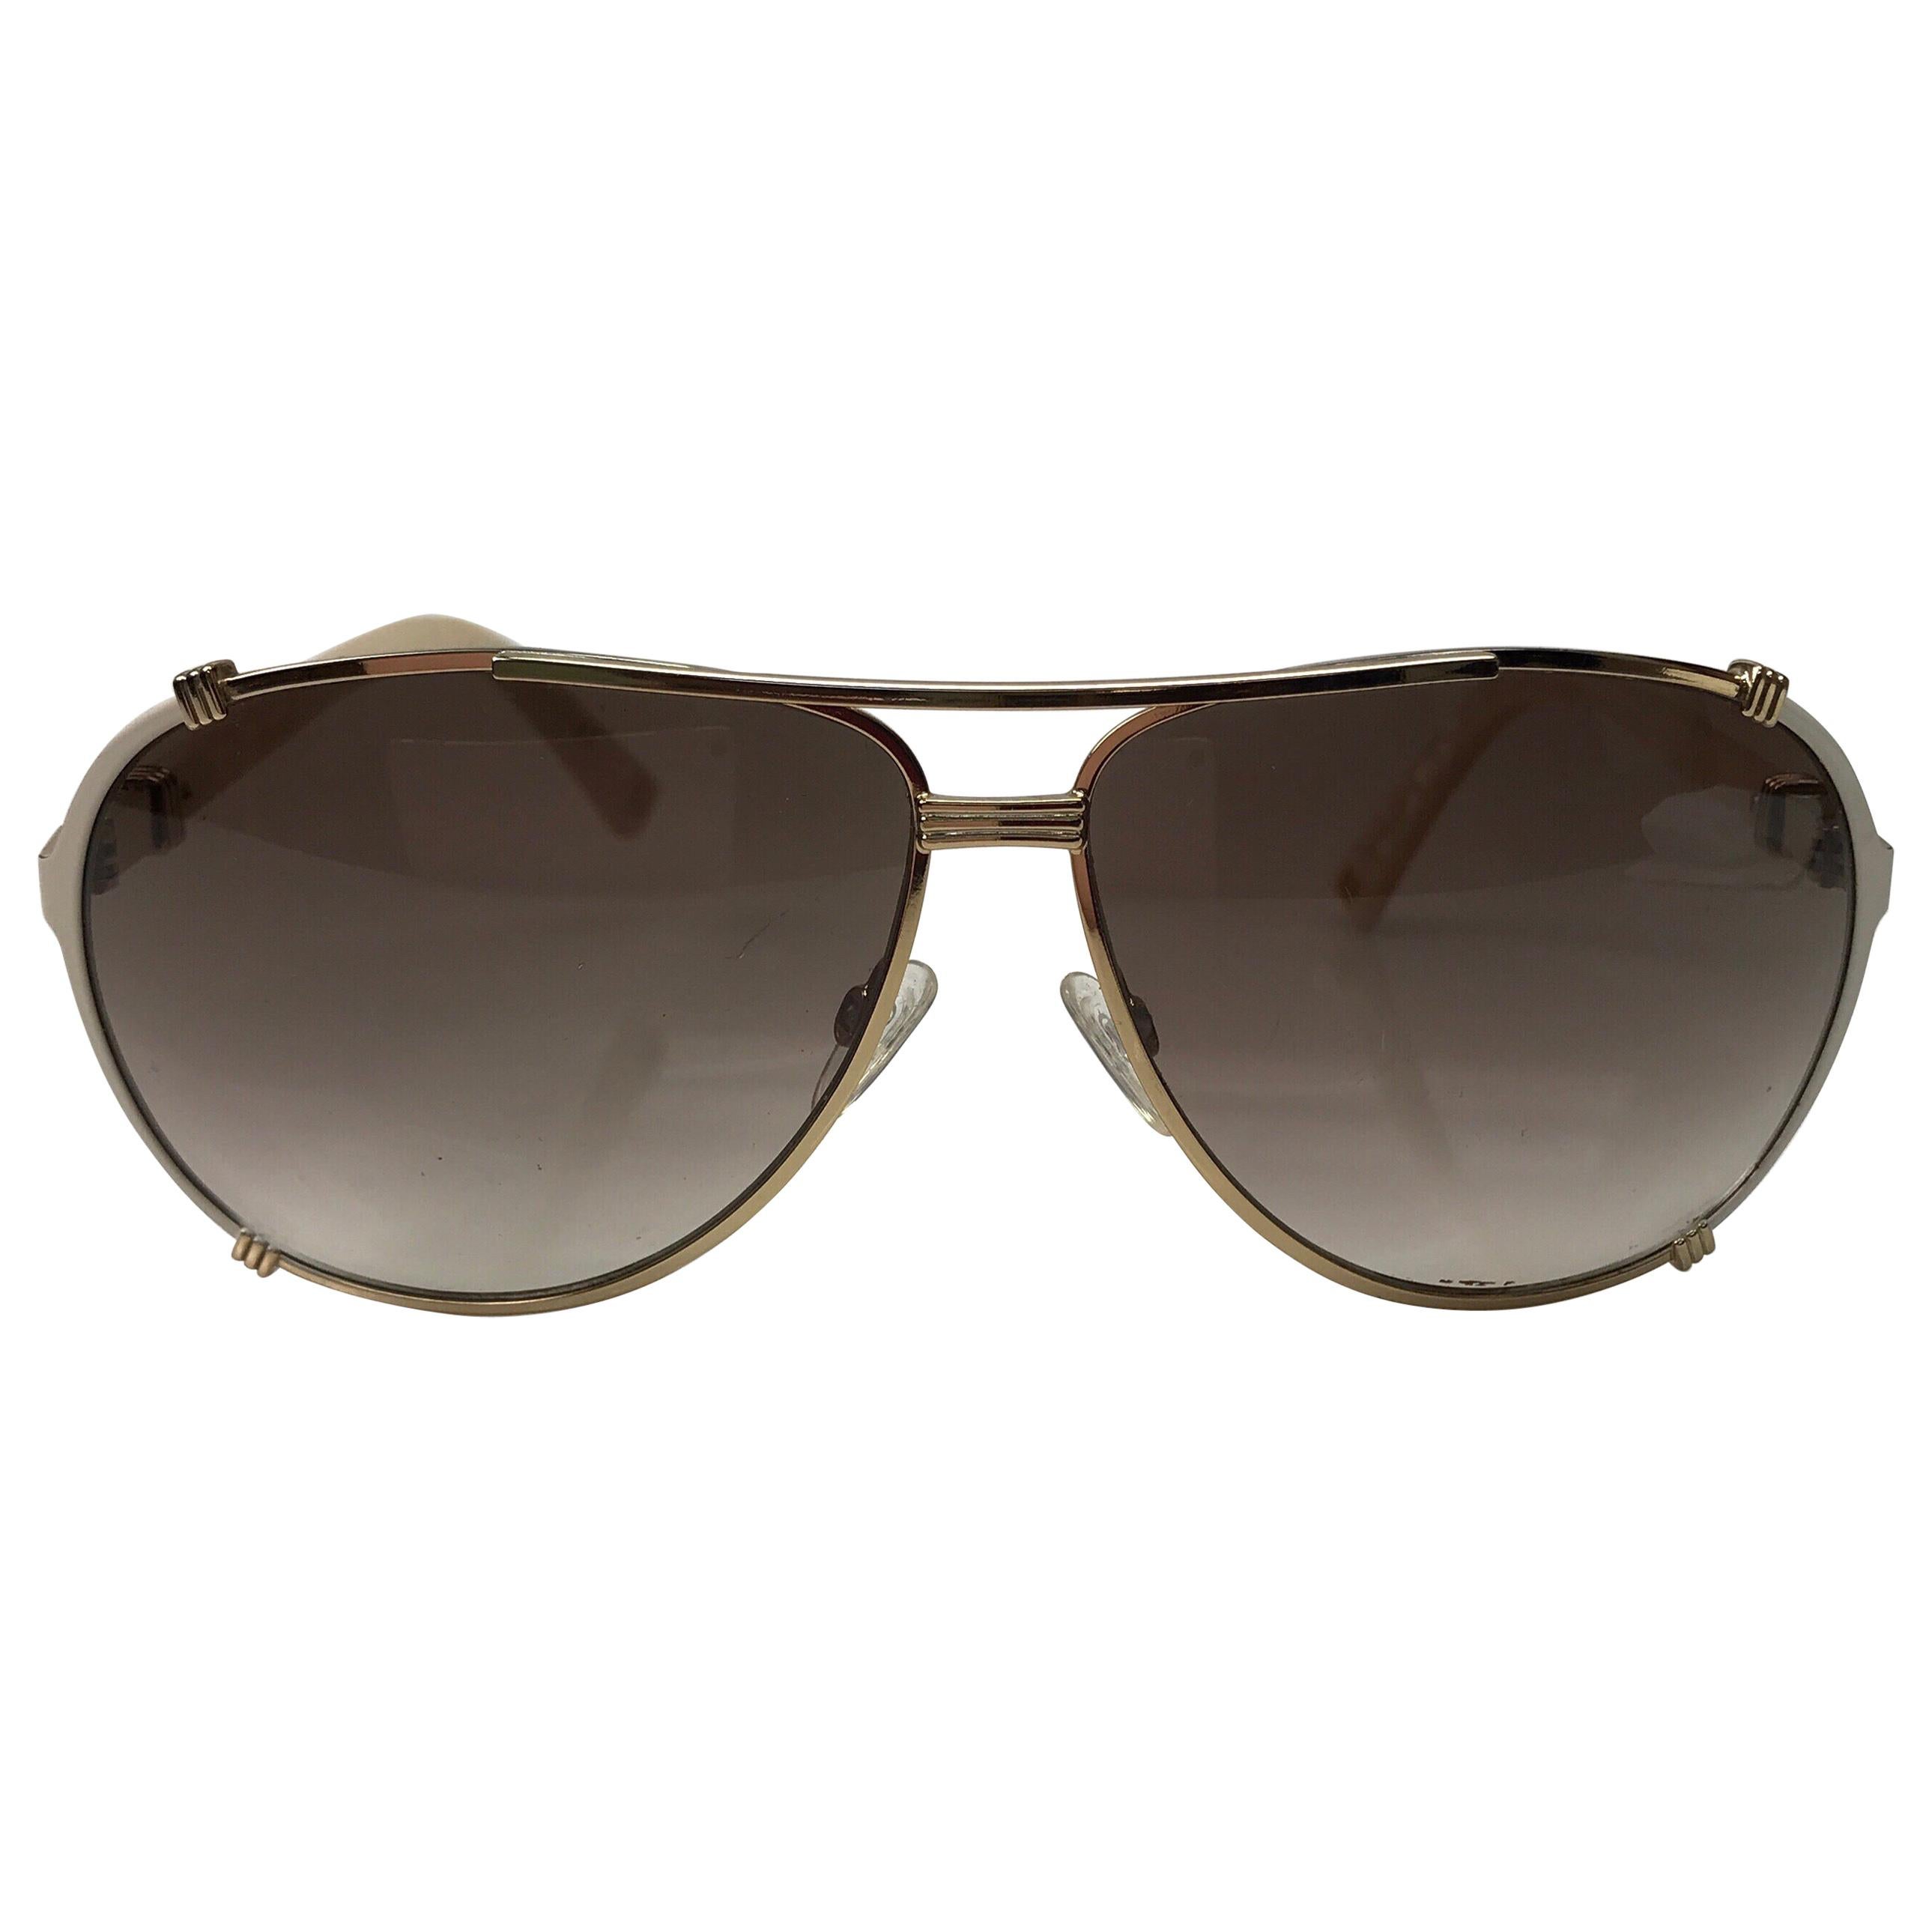 DIOR Gold & White aviator sunglasses w/ white legs & pink detail